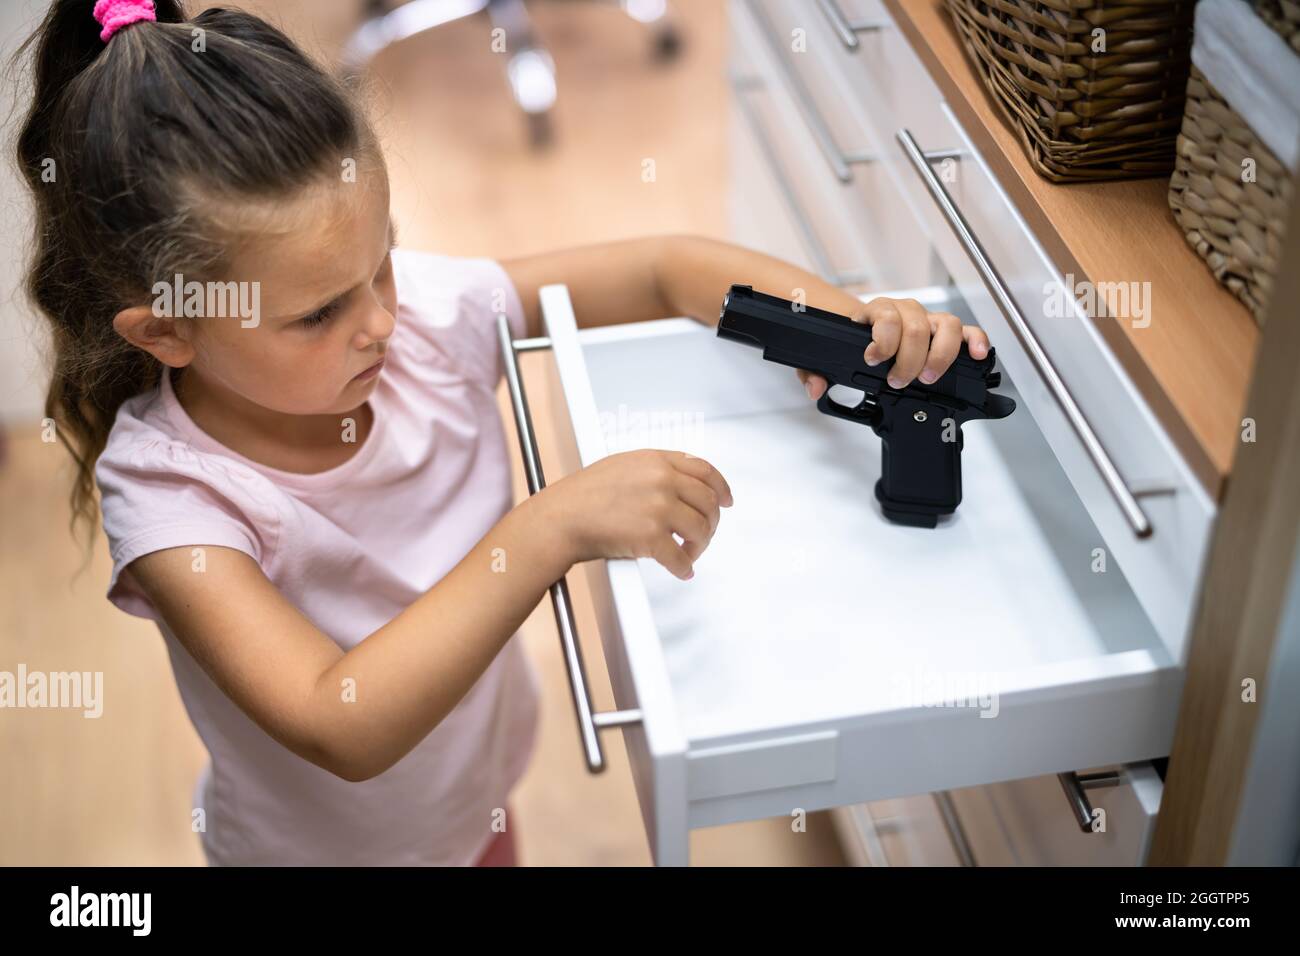 Kid With Gun. Girl Reaching For Pistol In Drawer. Children Safety Stock Photo